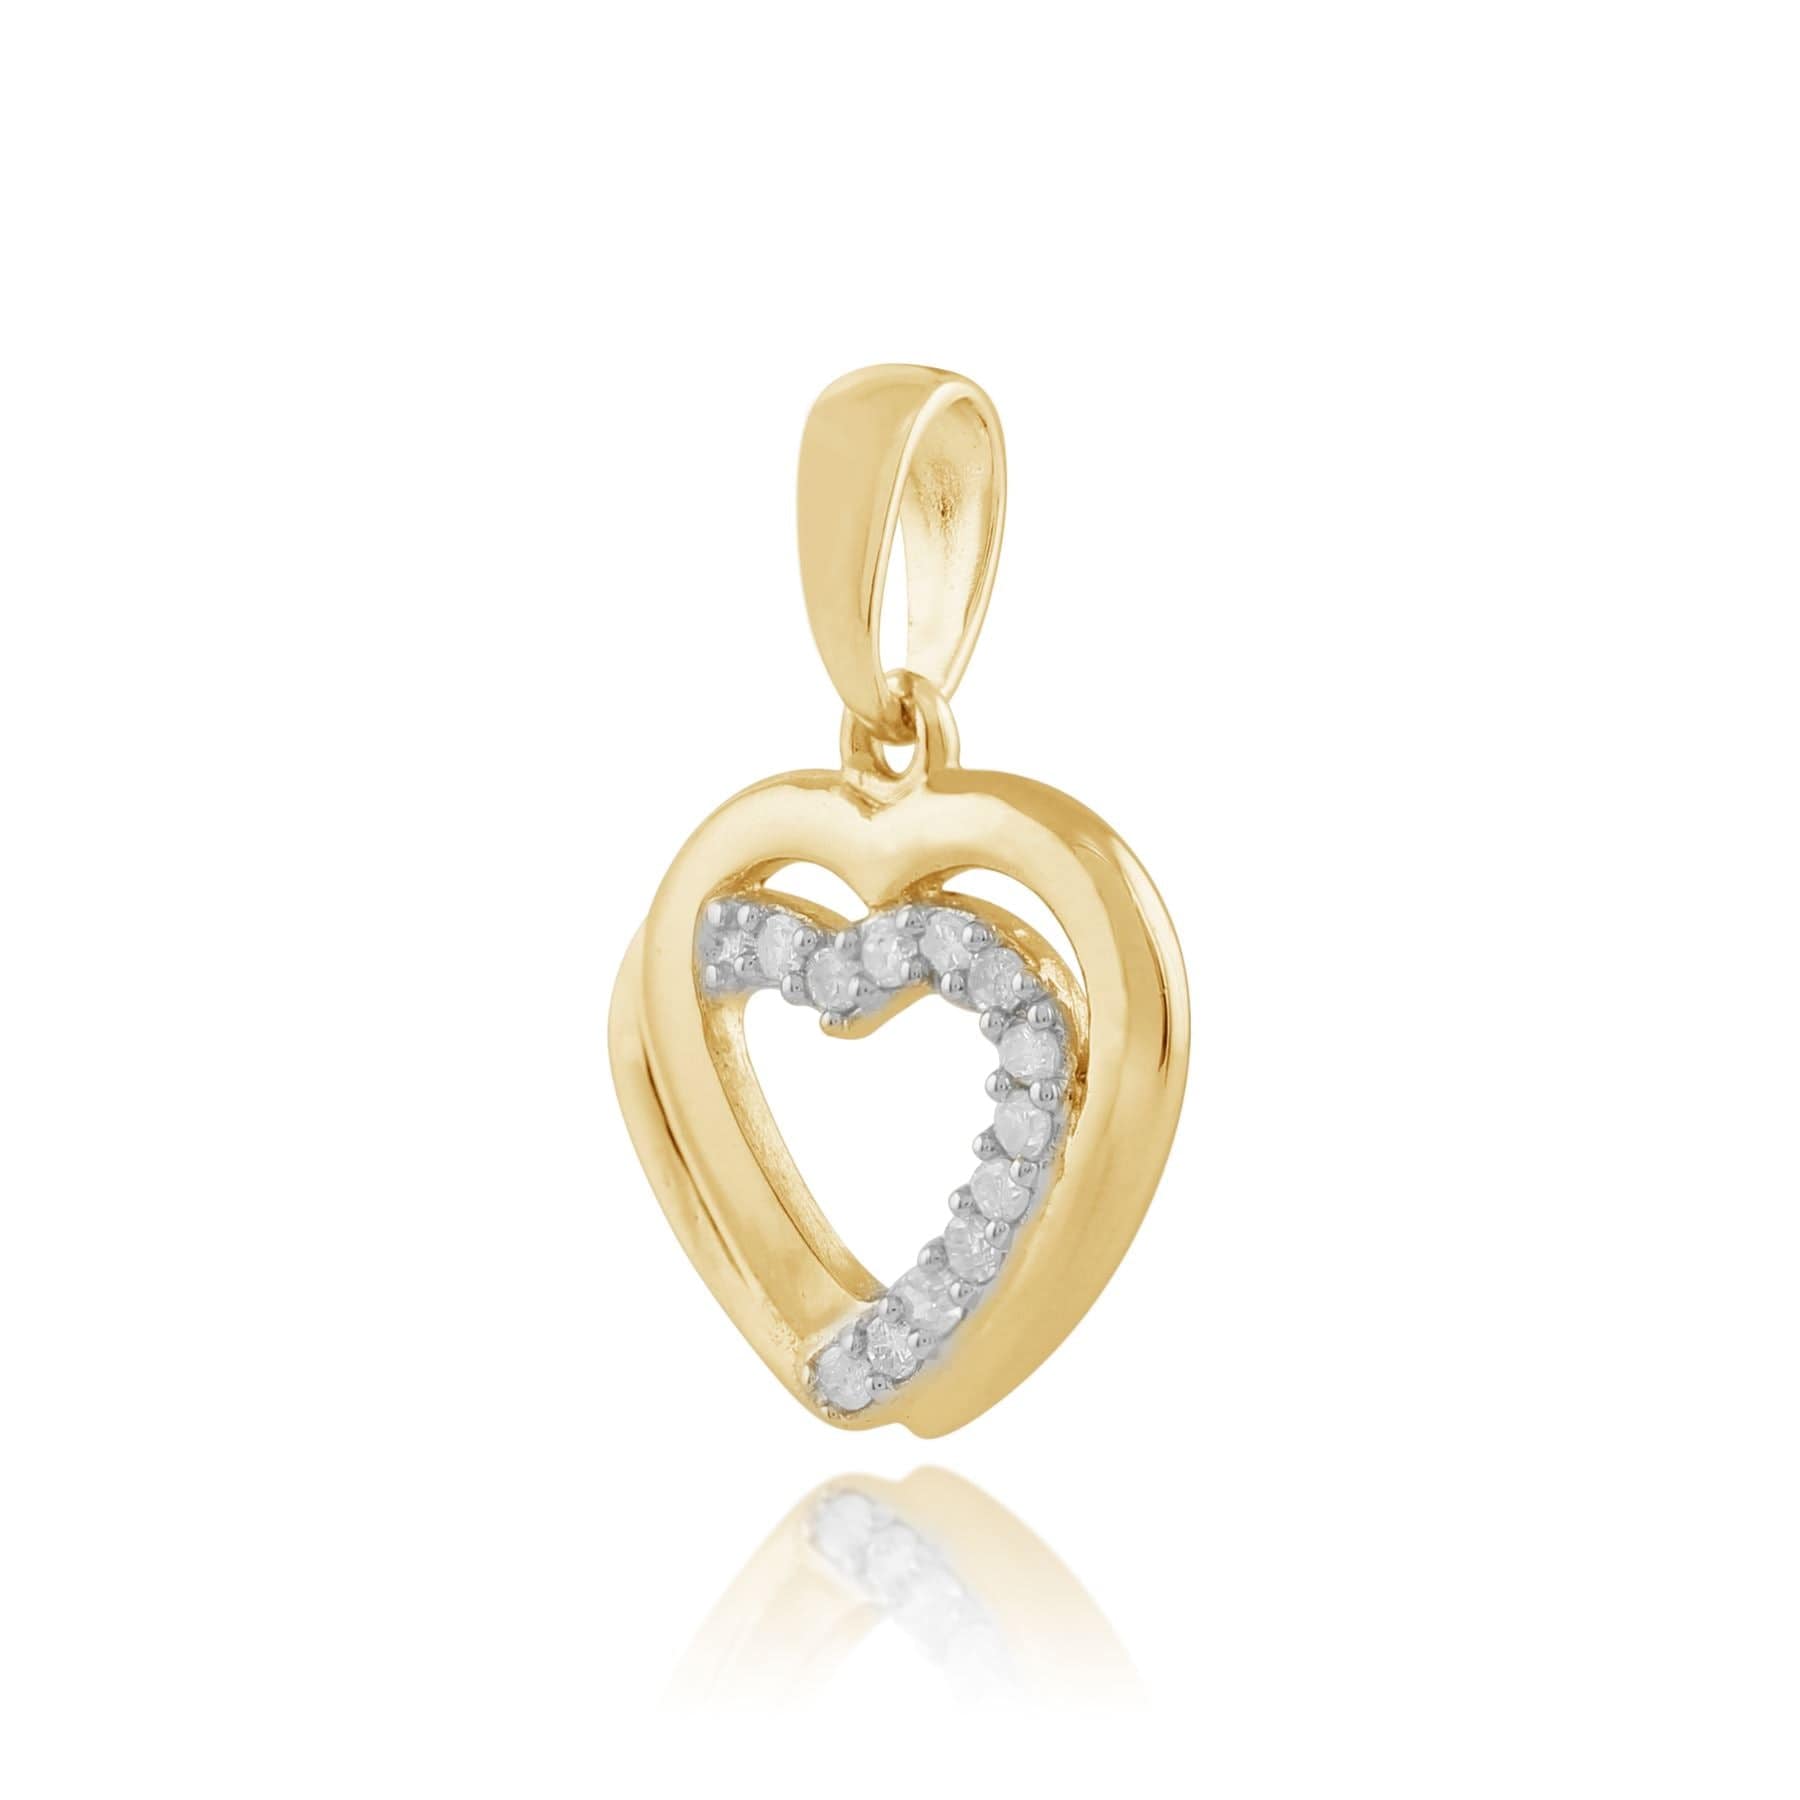 191P0697019 Gemondo 9ct Yellow Gold 0.06ct Diamond Hearts Pendant on Chain 2